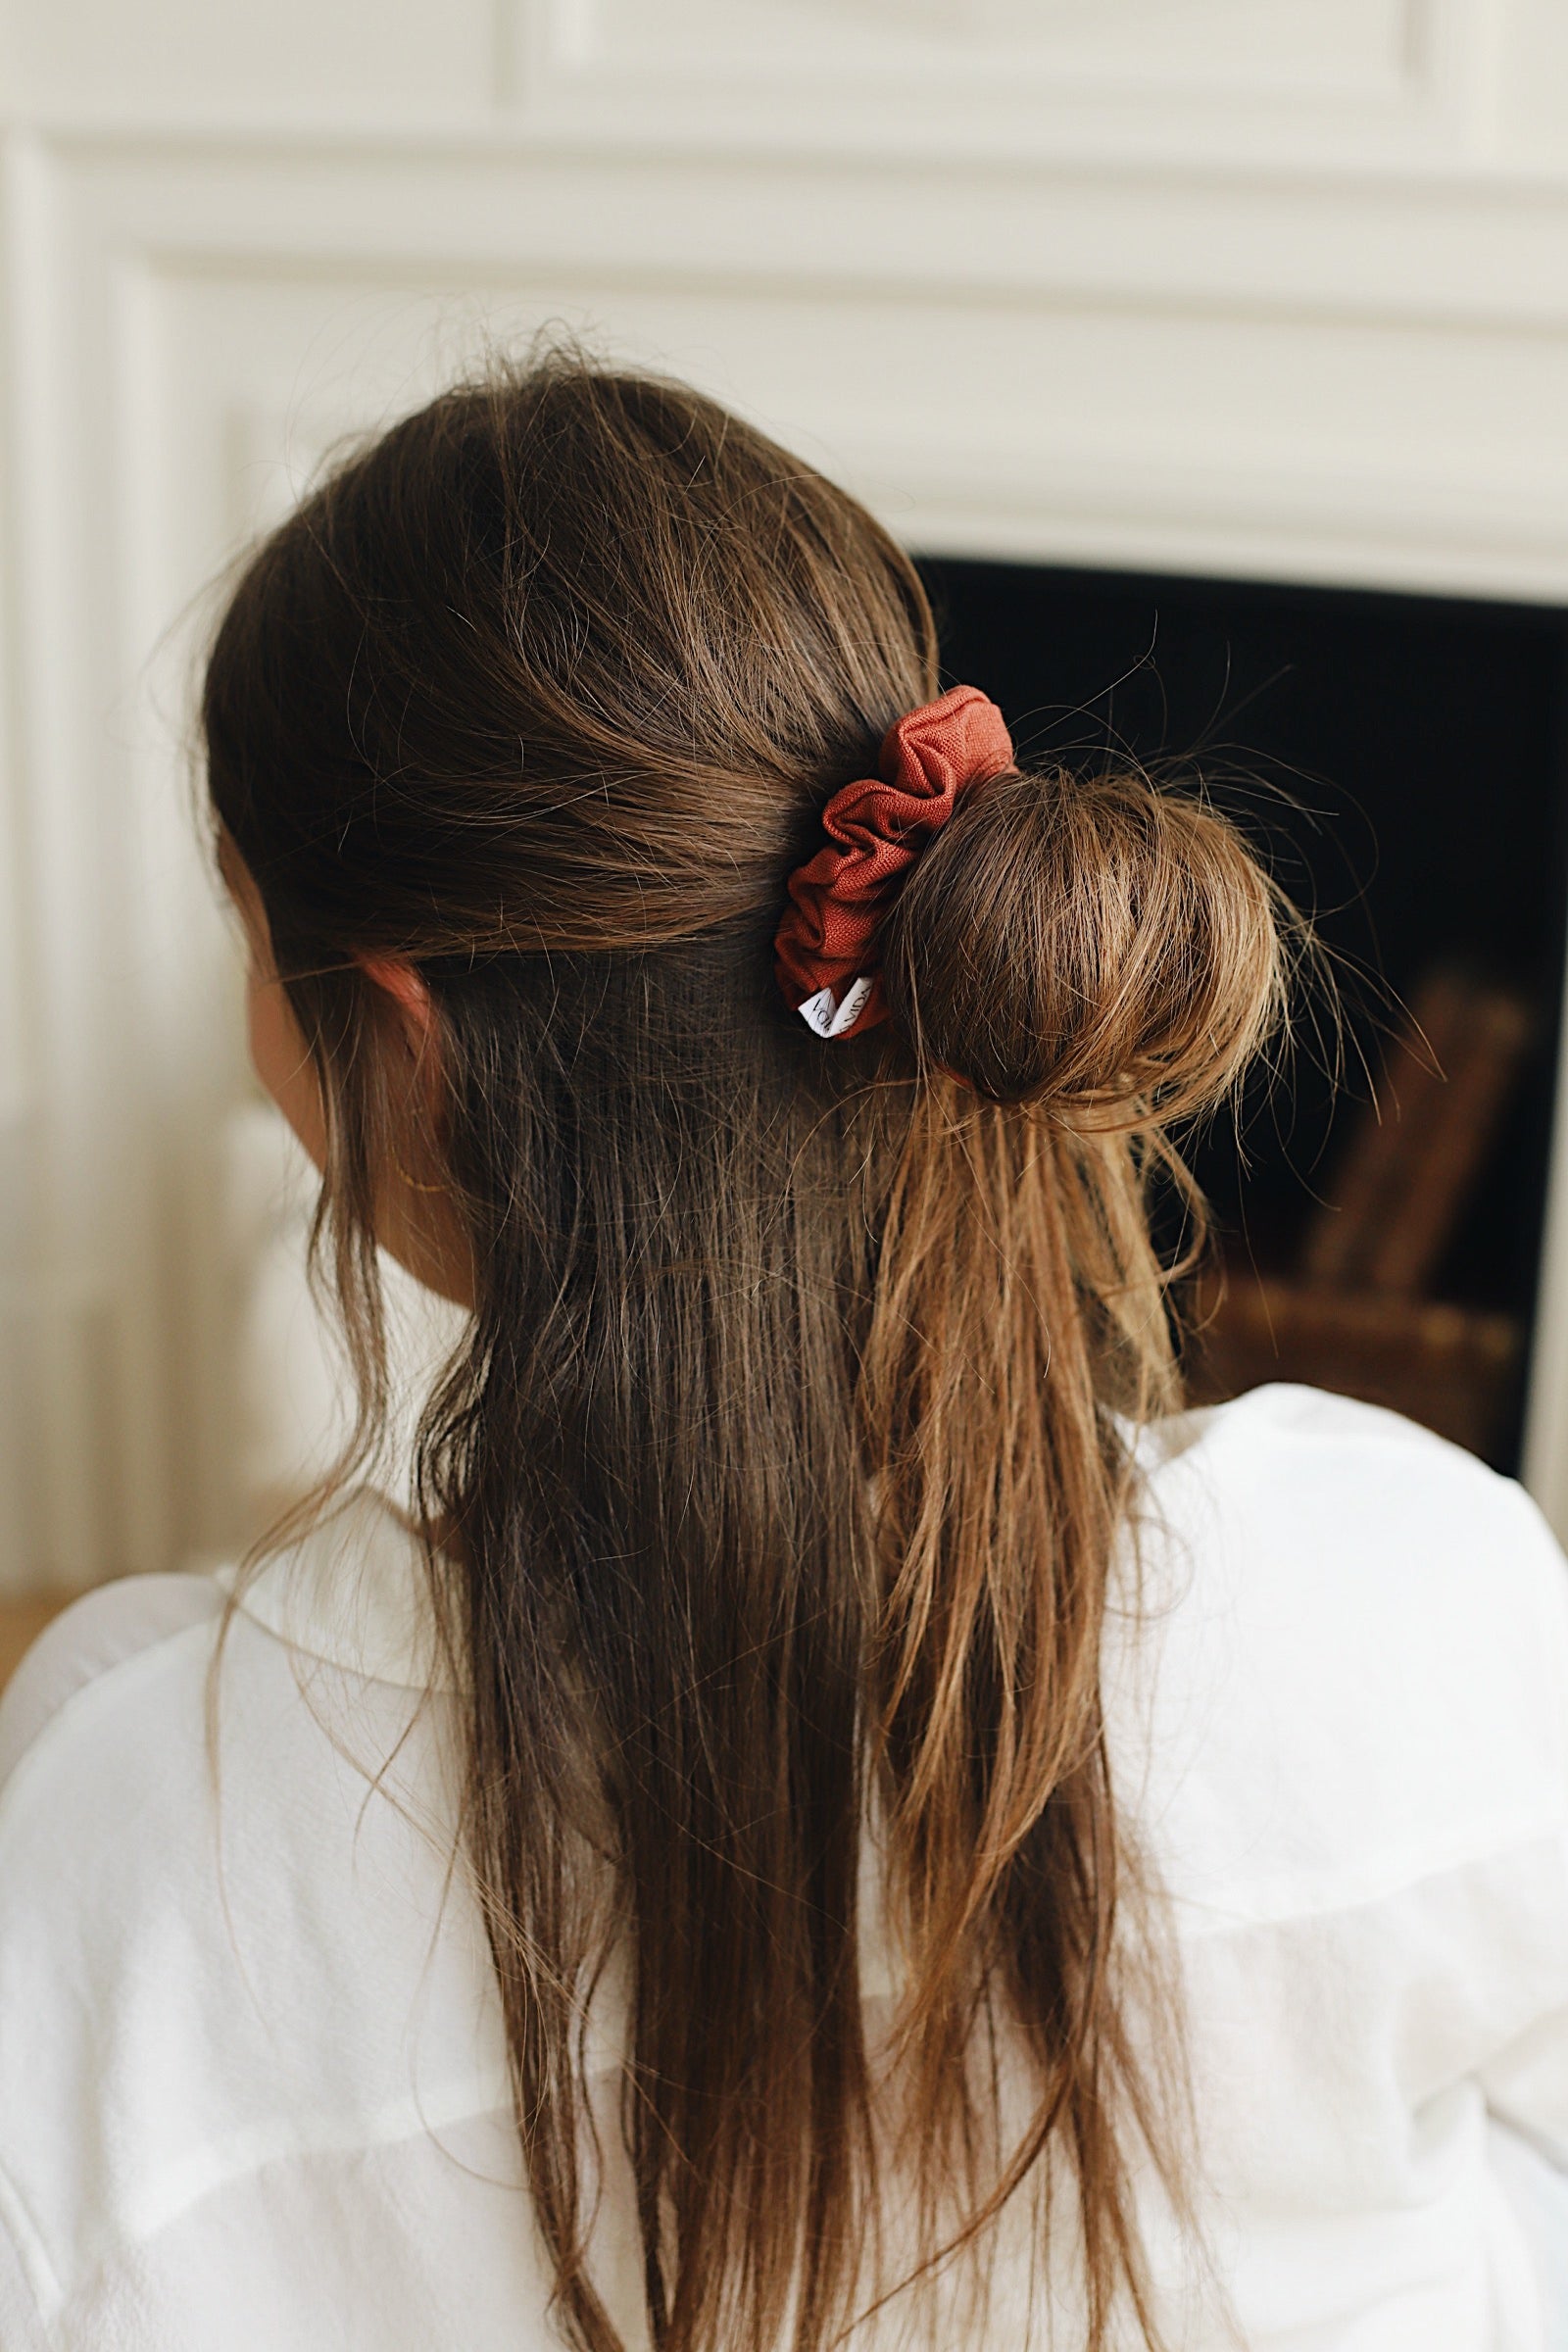 Terracotta Linen Scrunchie in model's half up half down hairstyle